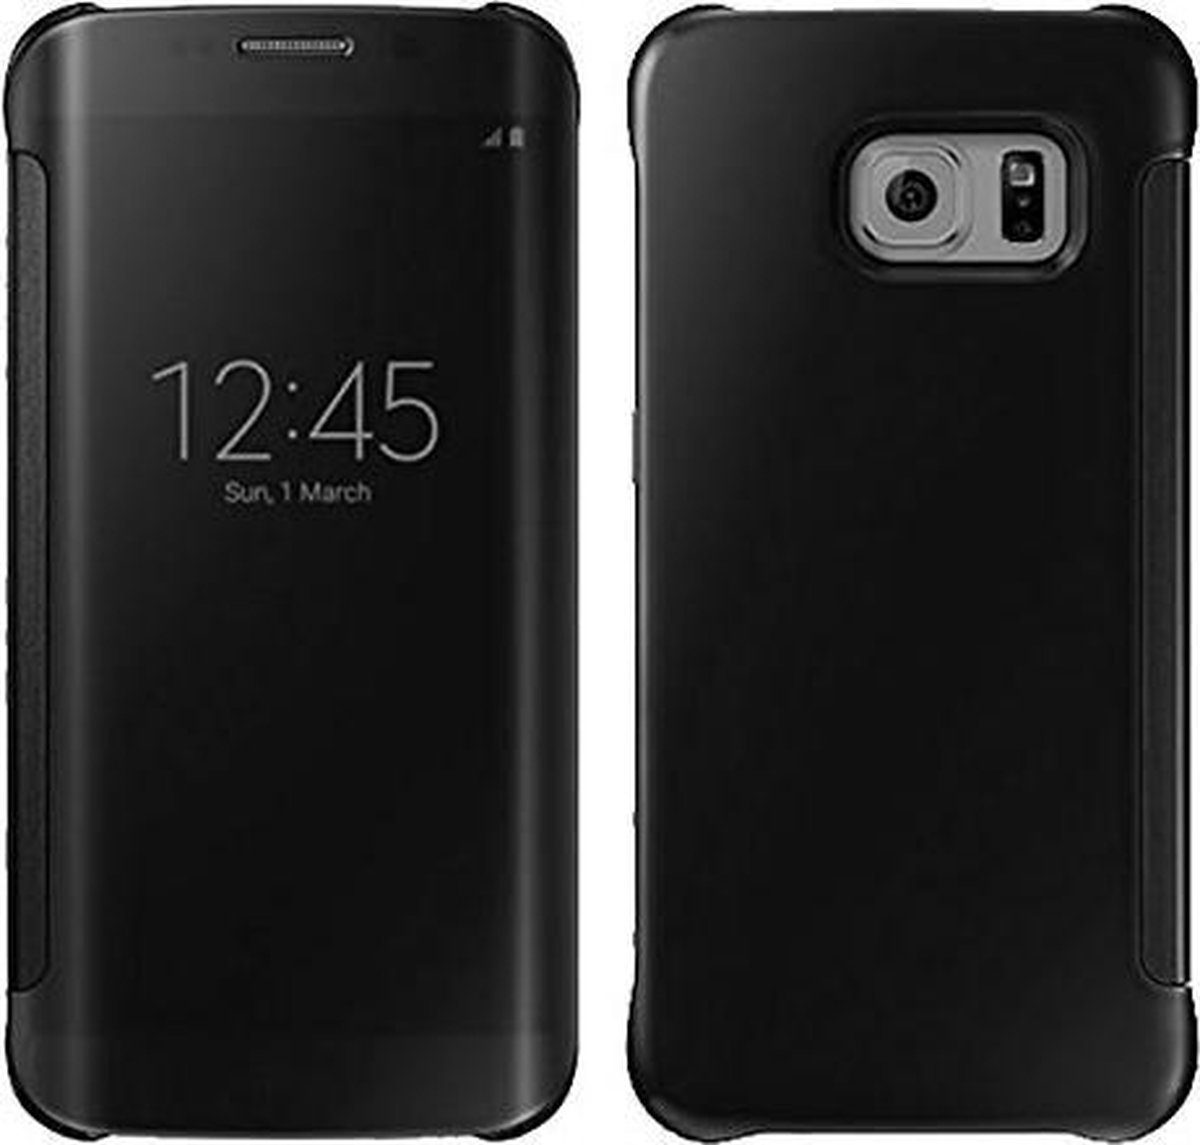 Classificeren idee Vaag Clear View Cover Set voor Samsung Galaxy S7 Edge – Zwart | bol.com